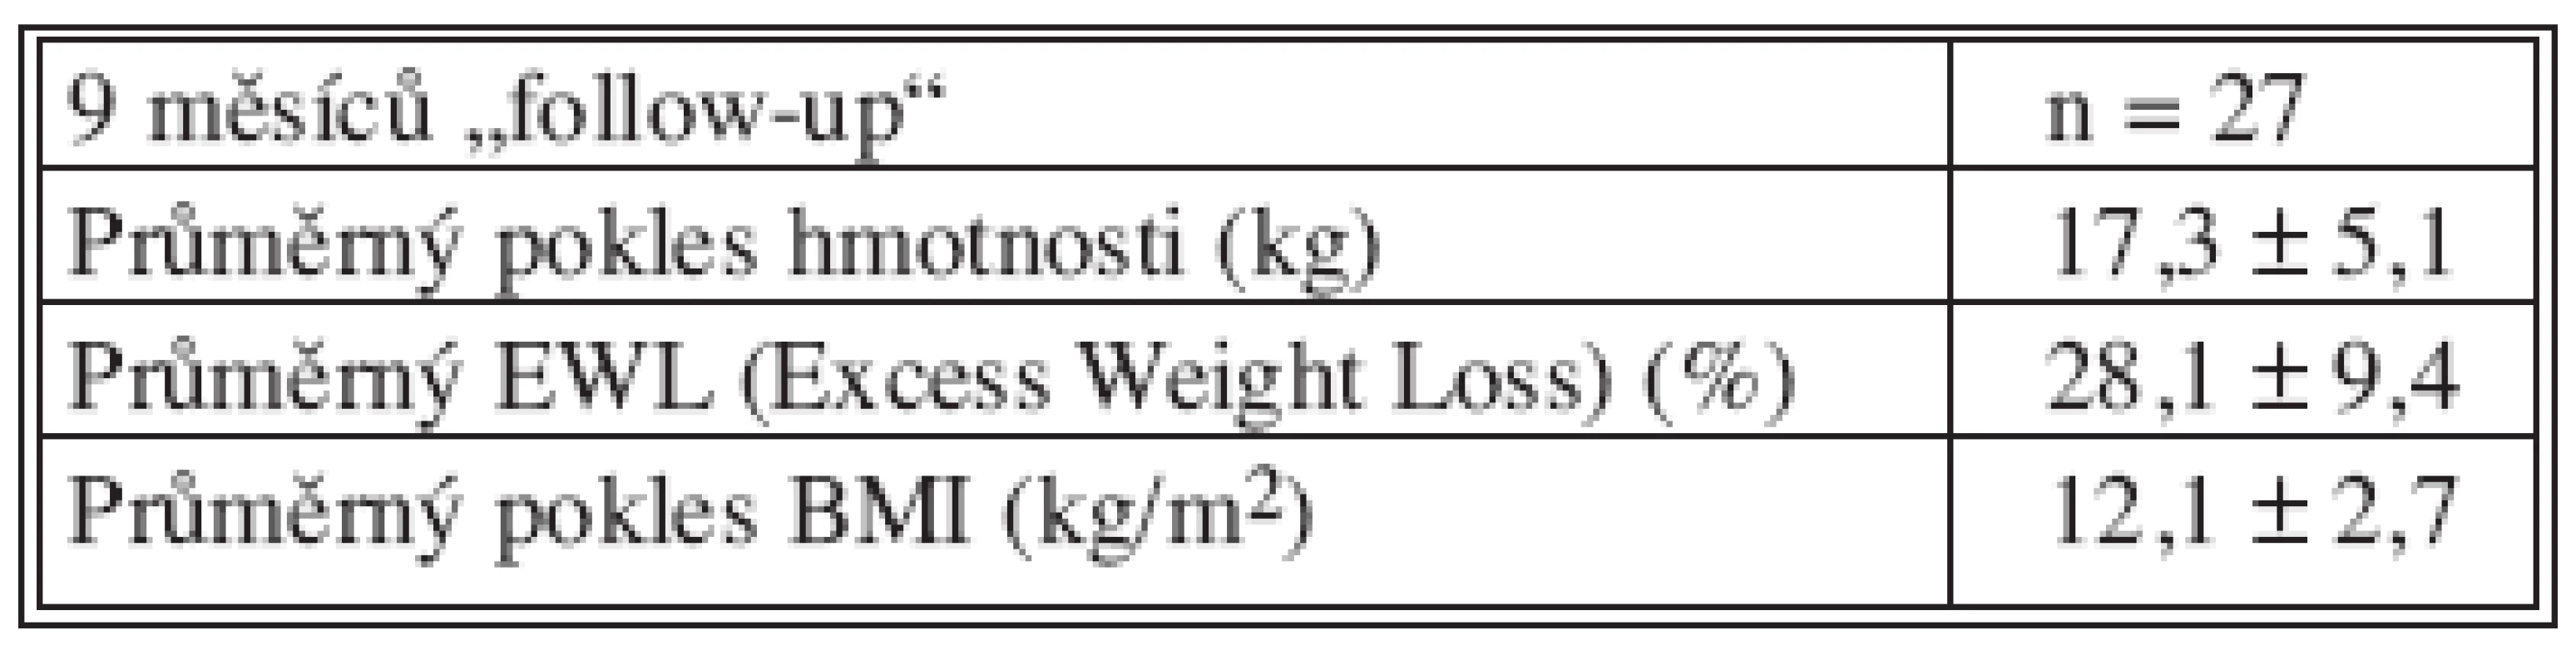 Pokles hmotnosti po SG
Tab. 3. Weight loss following SG